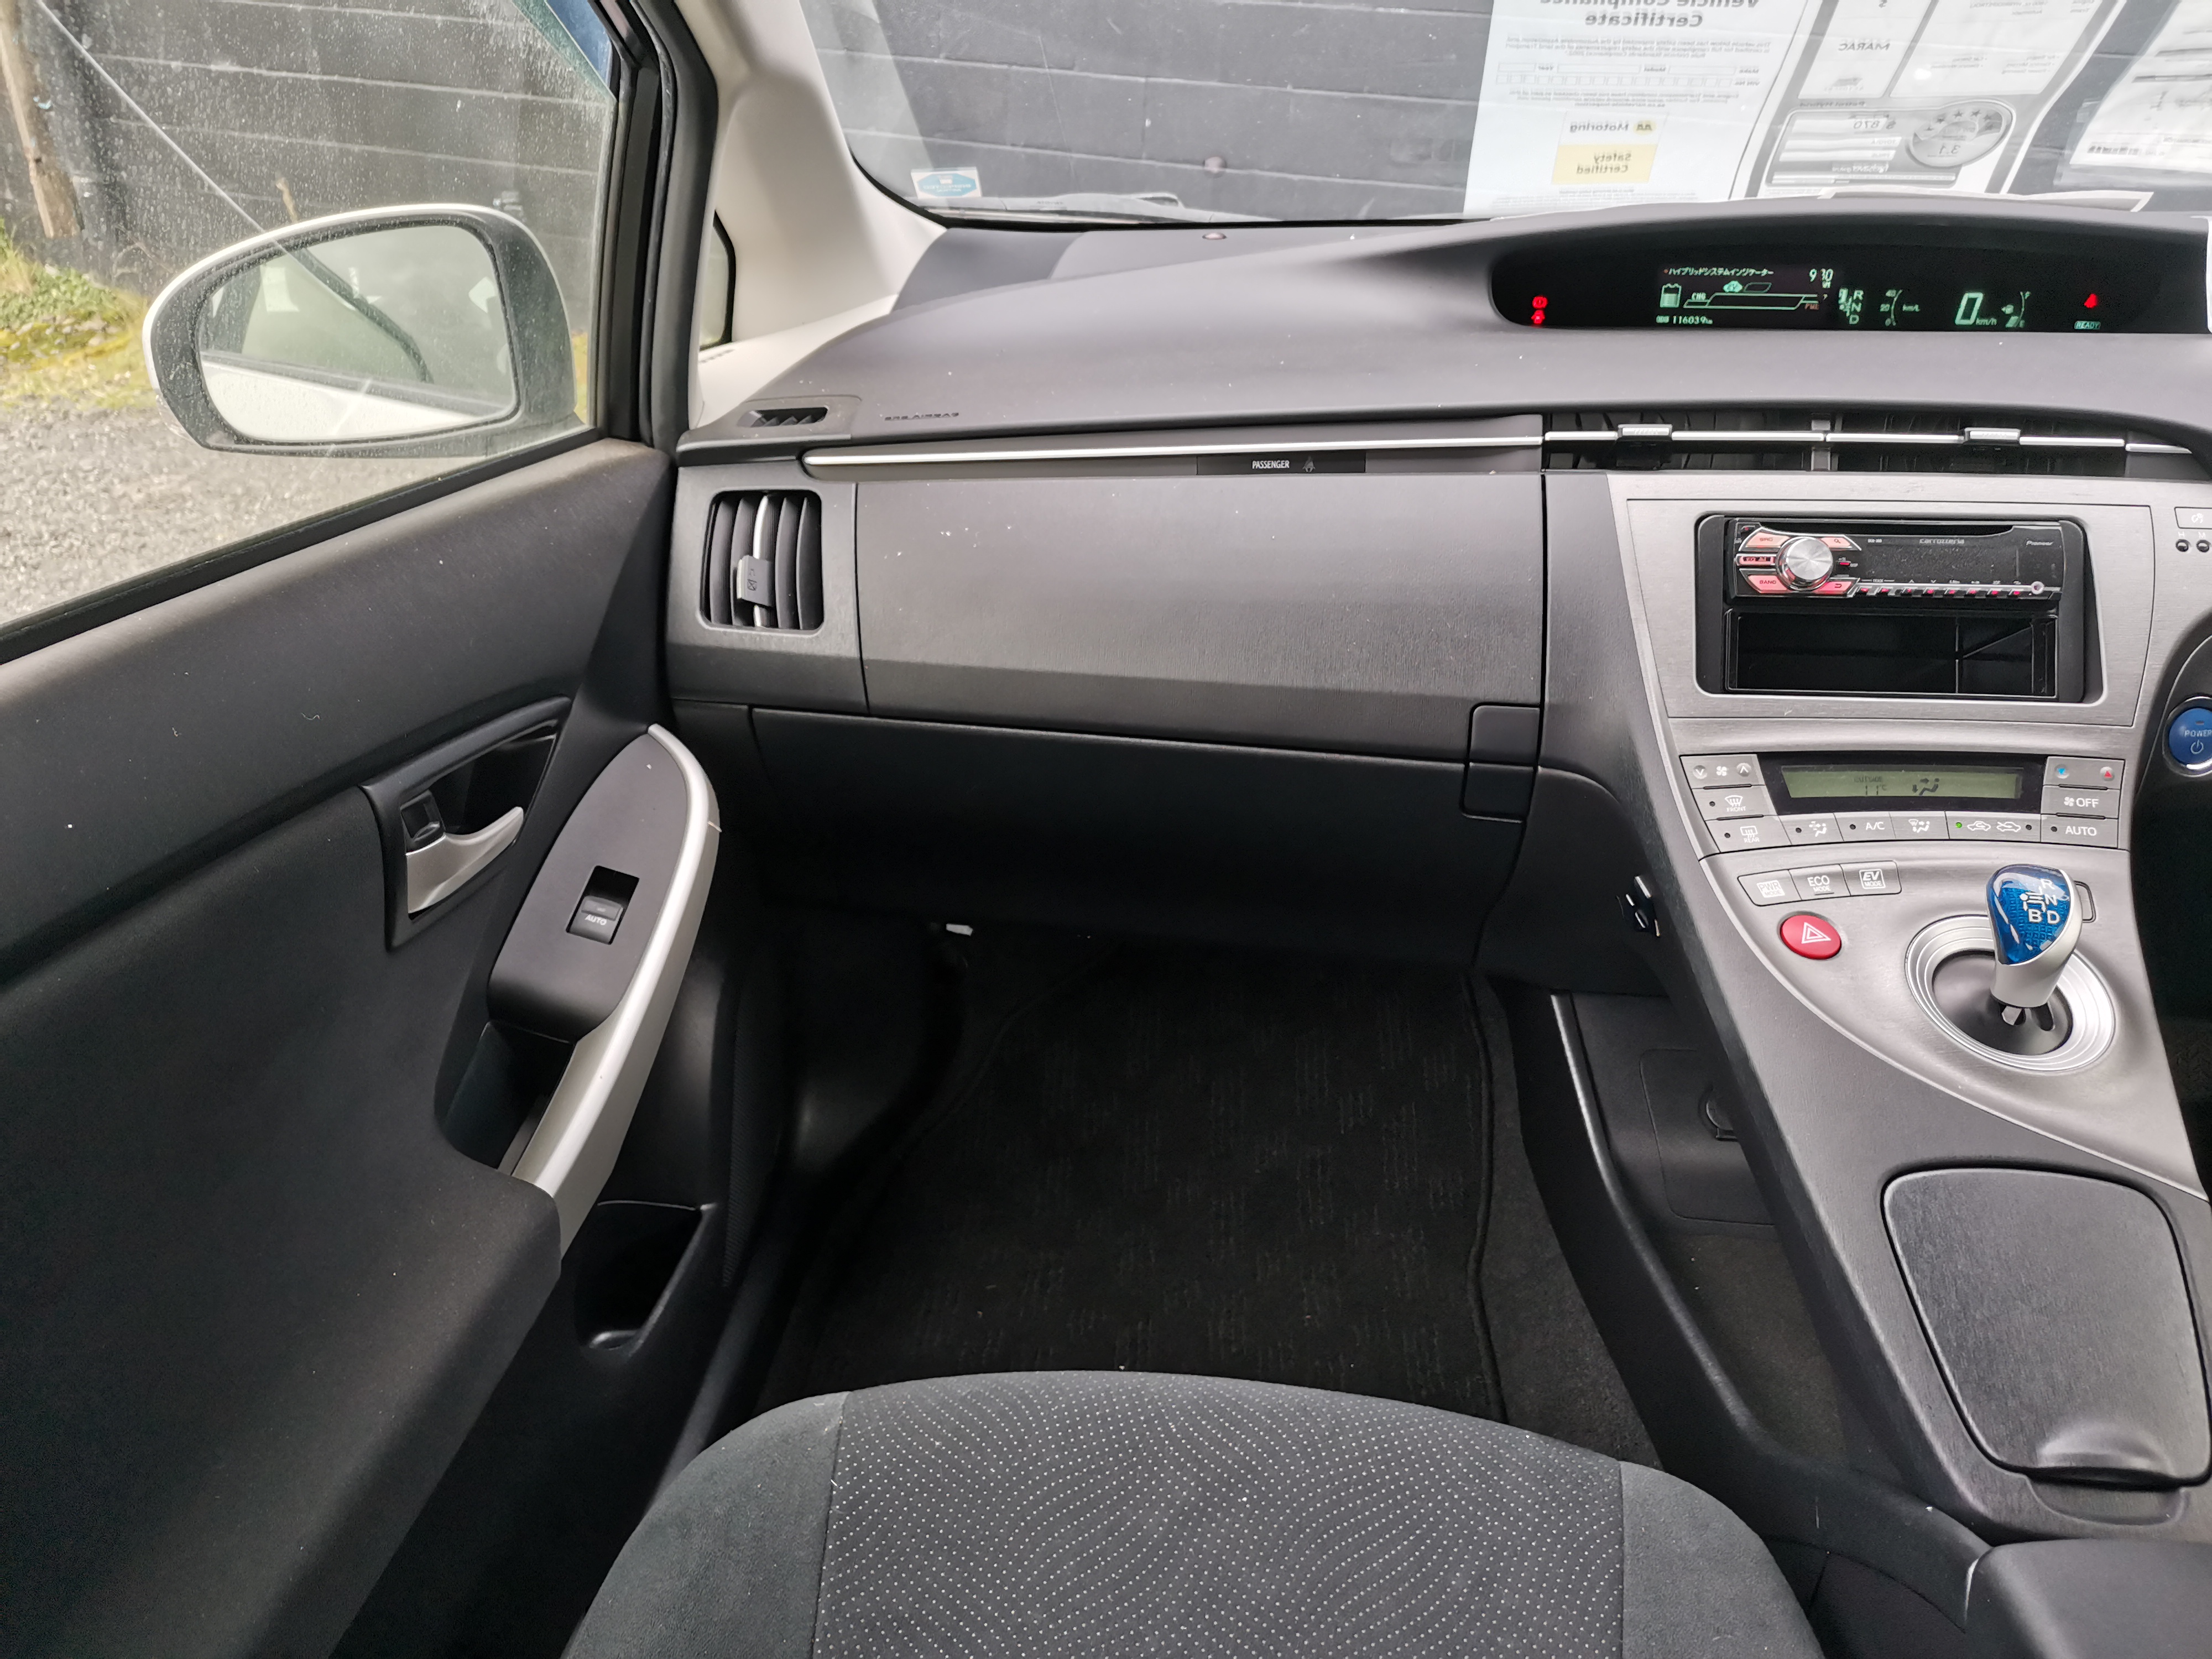 Toyota Prius 2015 Image 14